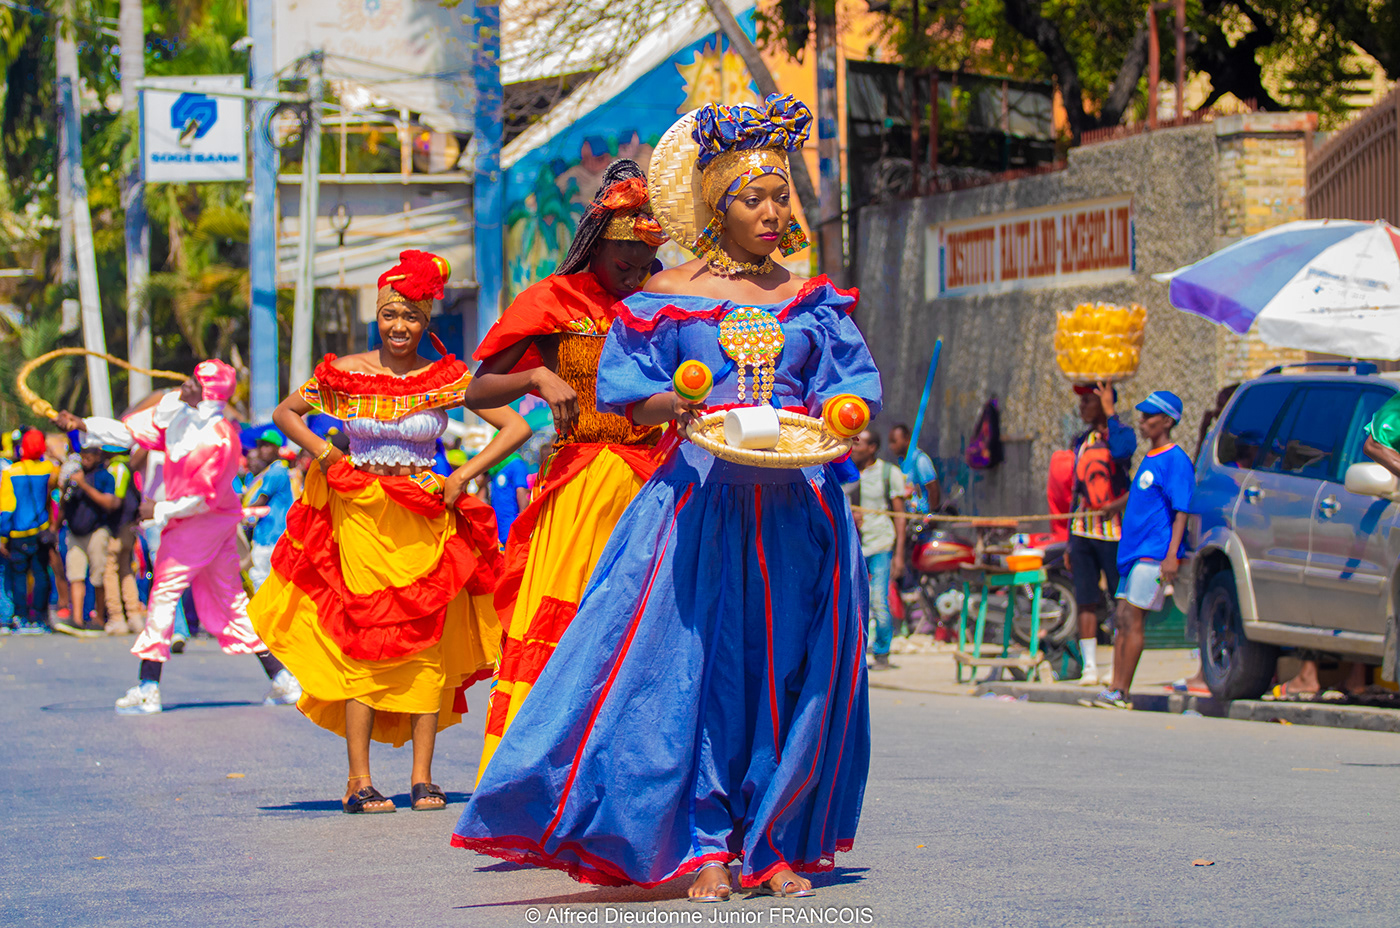 Alfred D Francois Jr Bopston photographes Haiti carnaval